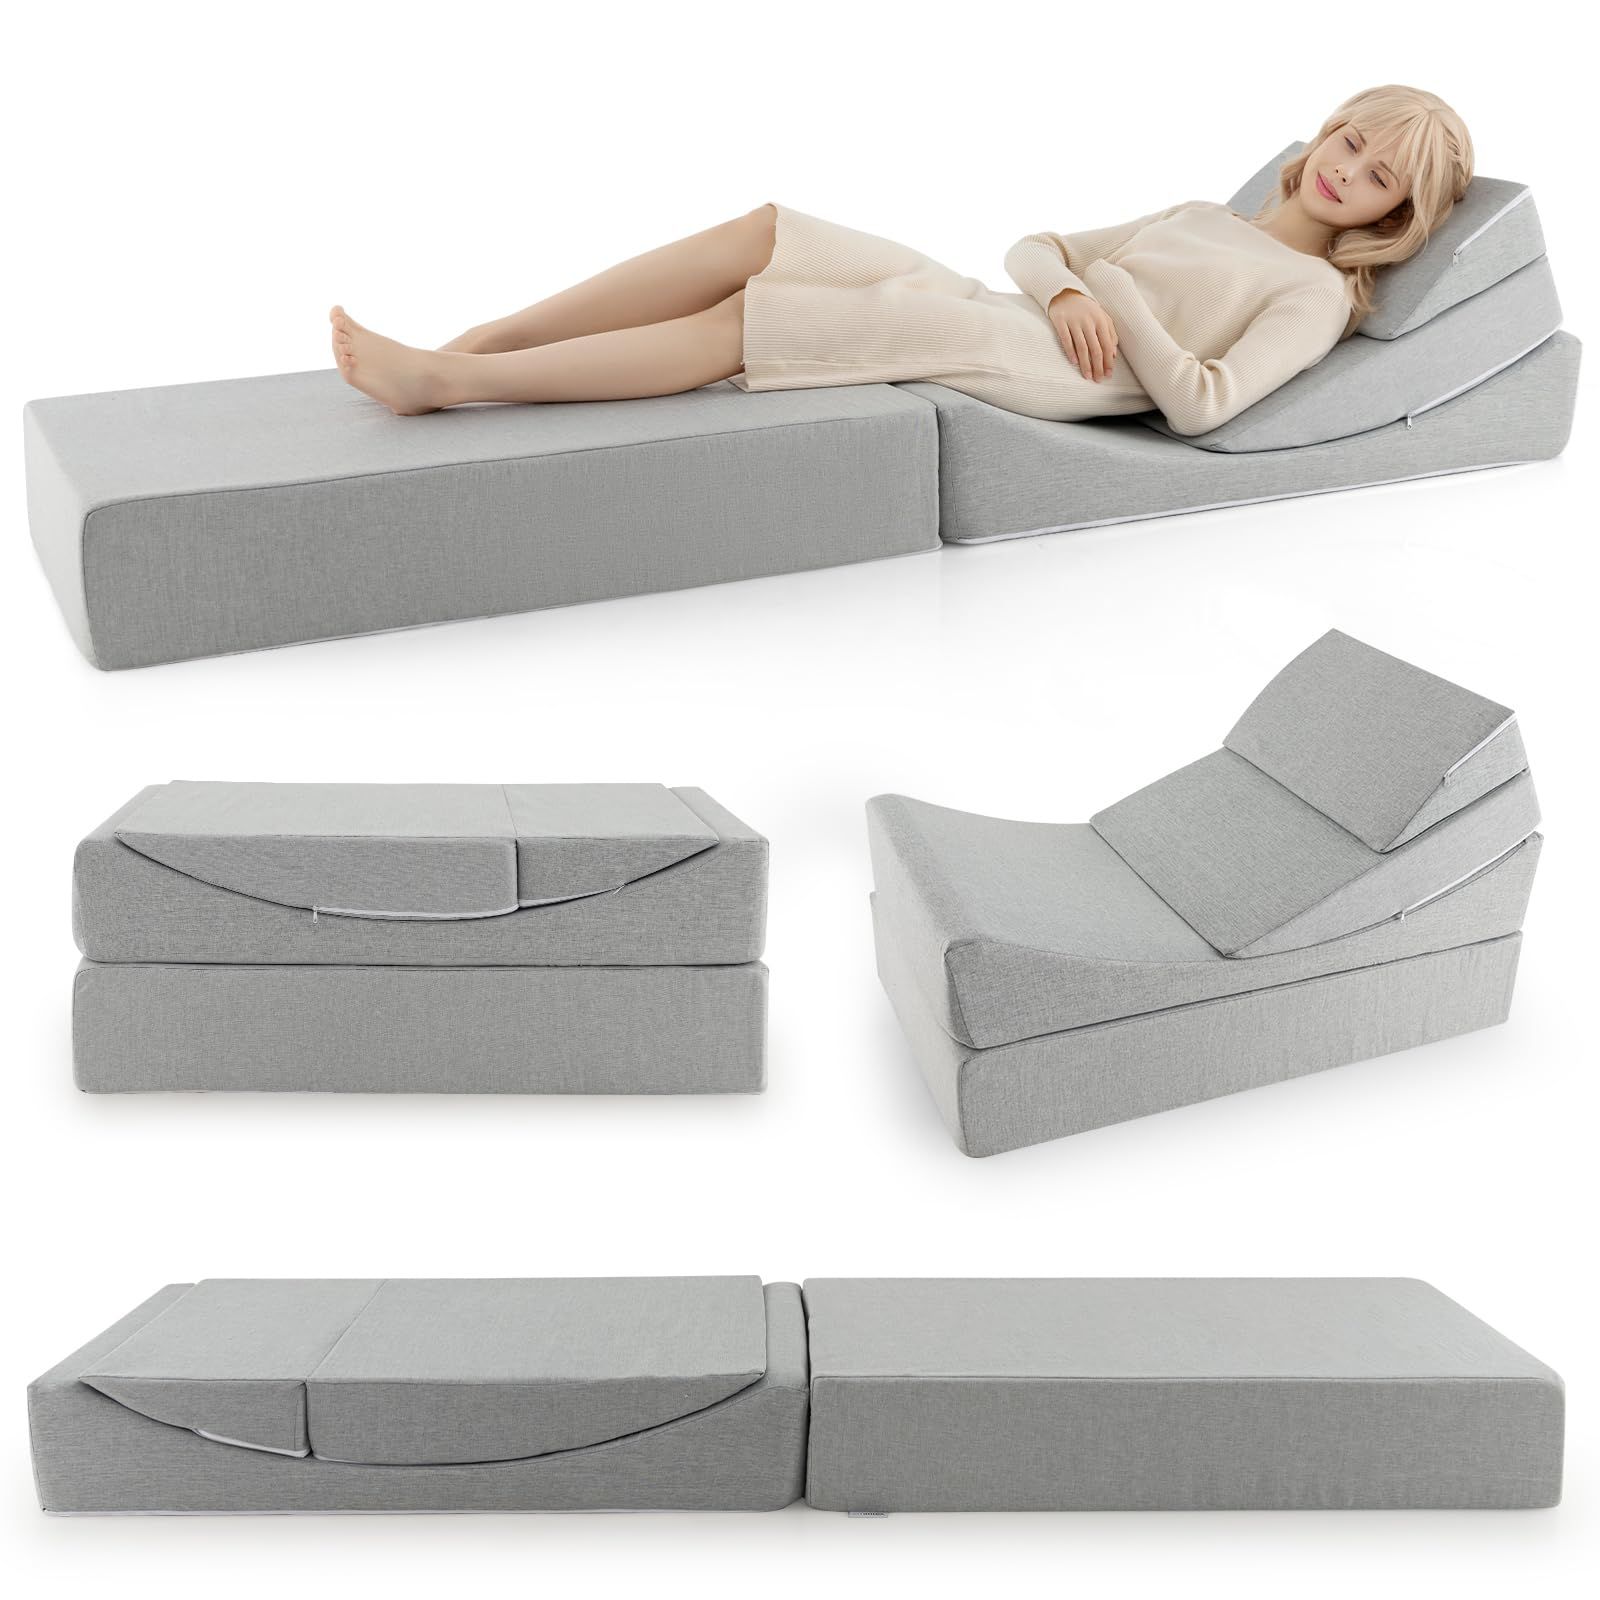 Single futon sofa bed and its benefits